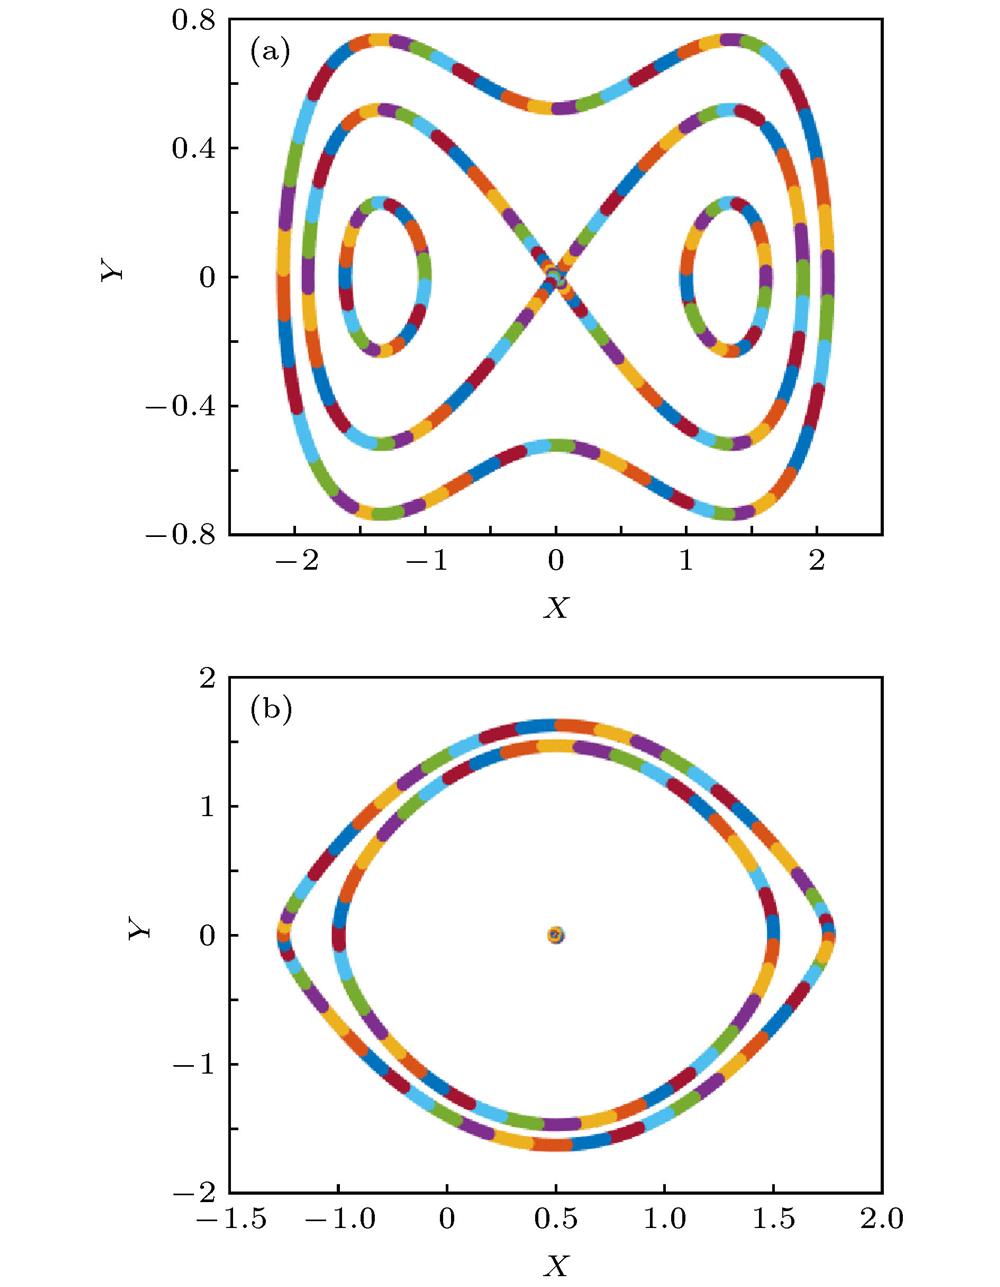 Phase portraits of System (15): (a) Homoclinic orbits (β1 = –1/10, β2 = 1/18); (b) heteroclinic orbits (β1 = 1, β2 = –5/9).系统(15)的相位图 (a)同宿轨道(β1 = –1/10, β2 = 1/18); (b) 异宿轨道(β1 = 1, β2 = –5/9)